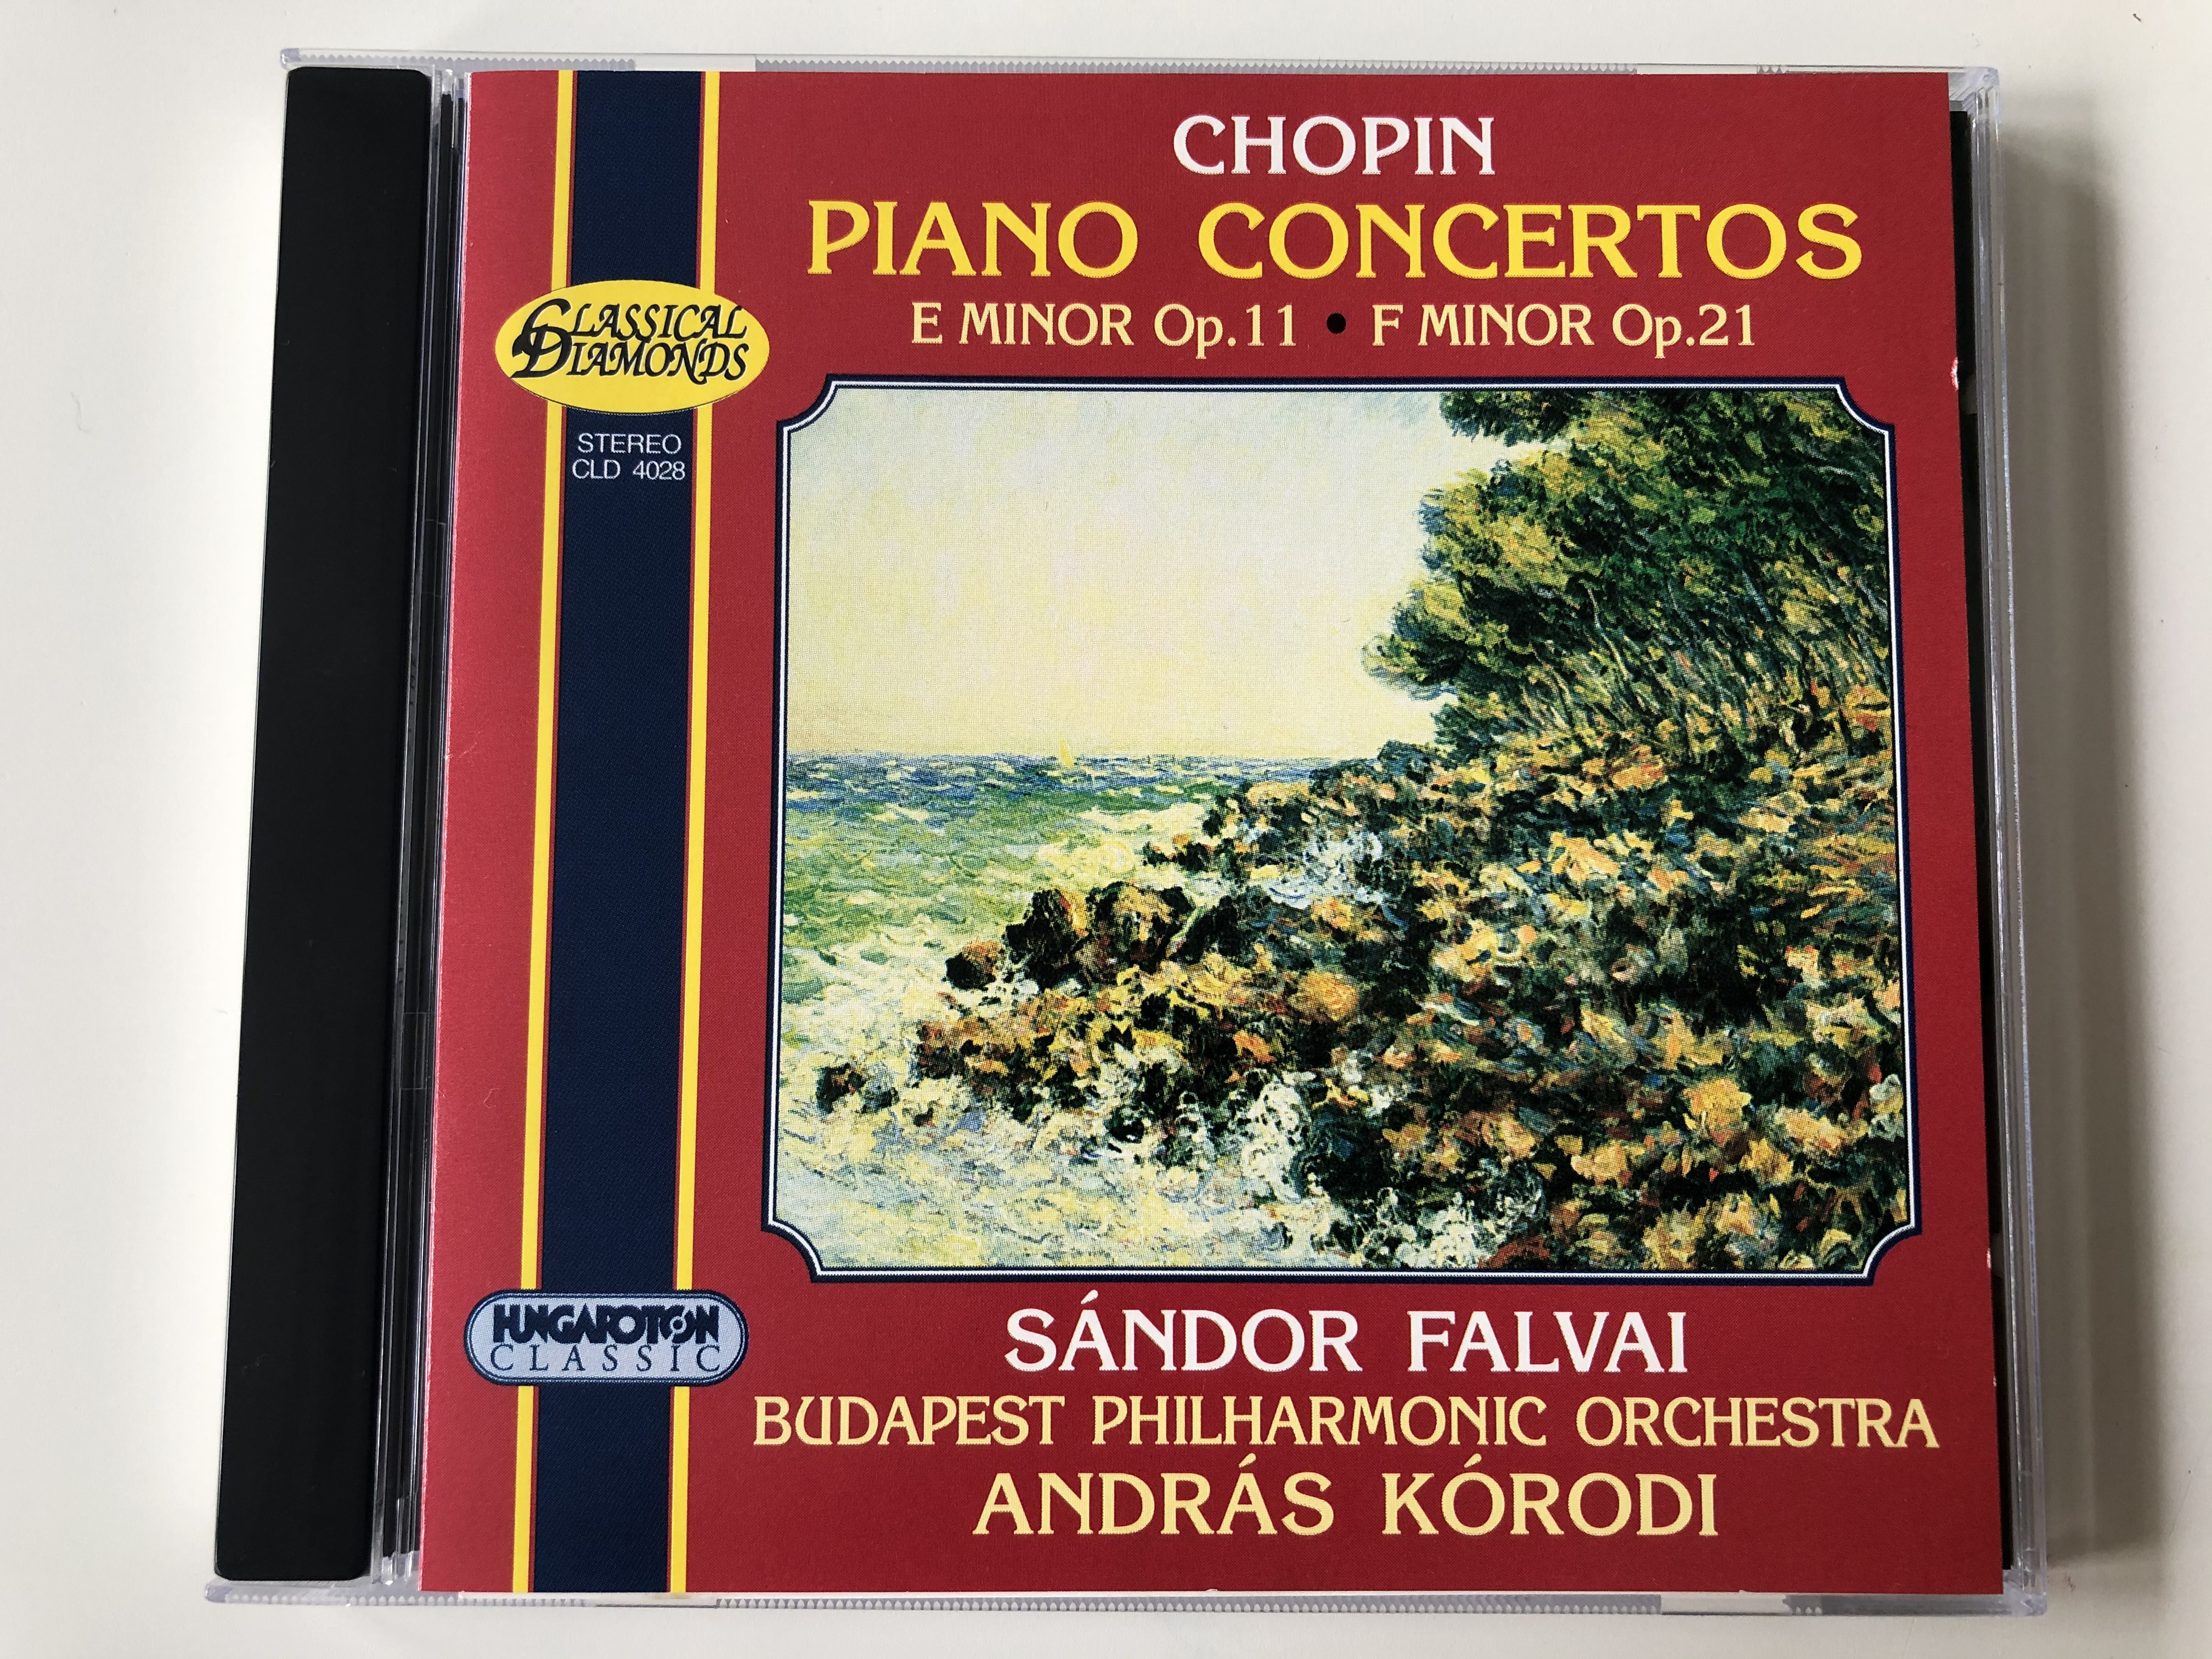 chopin-piano-concertos-e-minor-op.-11-f-minor-op.-21-sandor-falvai-budapest-philharmonic-orchestra-andras-korodi-classical-diamonds-audio-cd-1997-stereo-cld-4028-1-.jpg